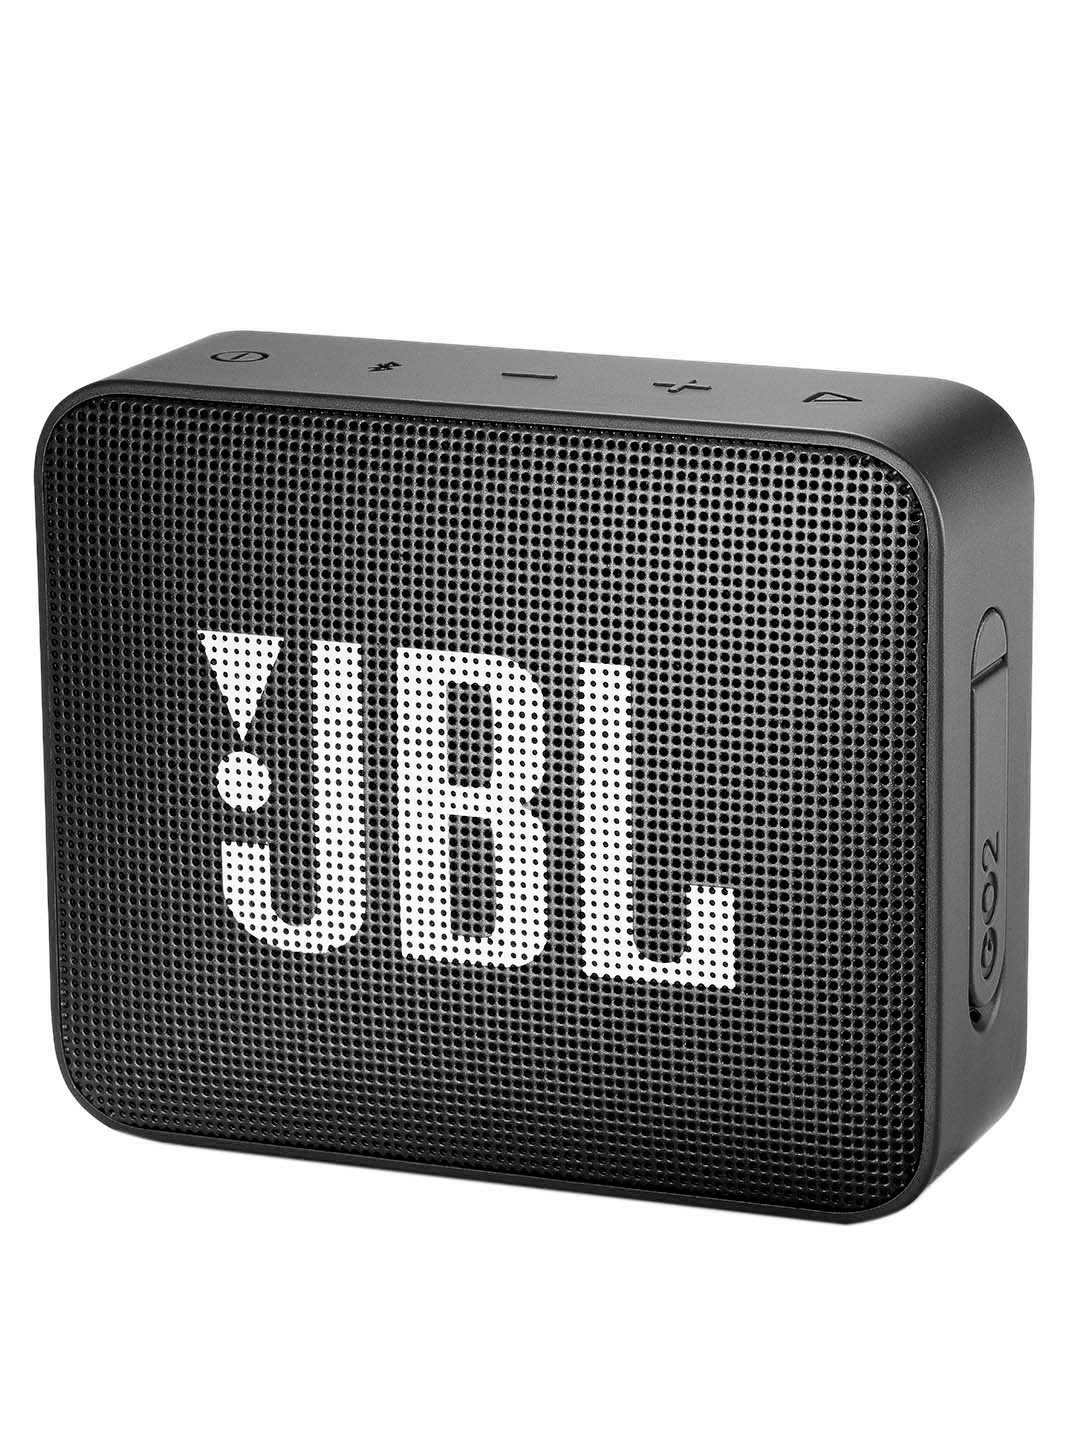 For 1499/-(50% Off) JBL Go 2 speaker at Rs.1499 at Myntra